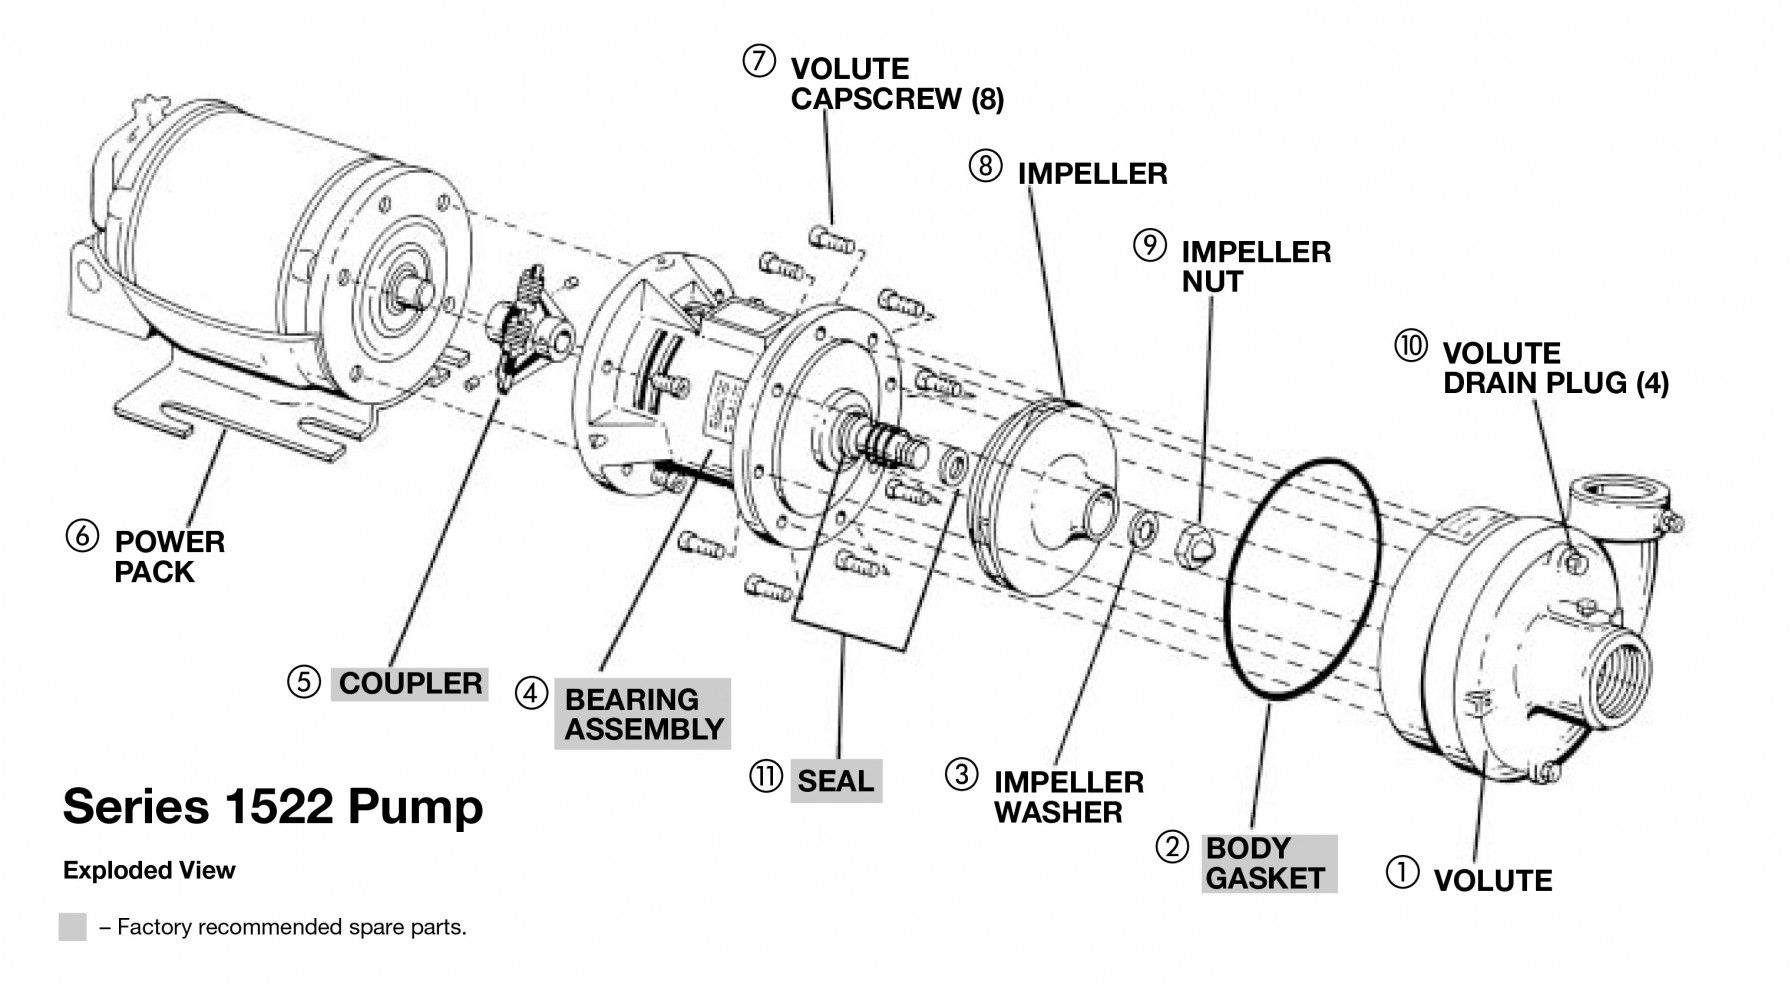 centrifugal pump parts diagram